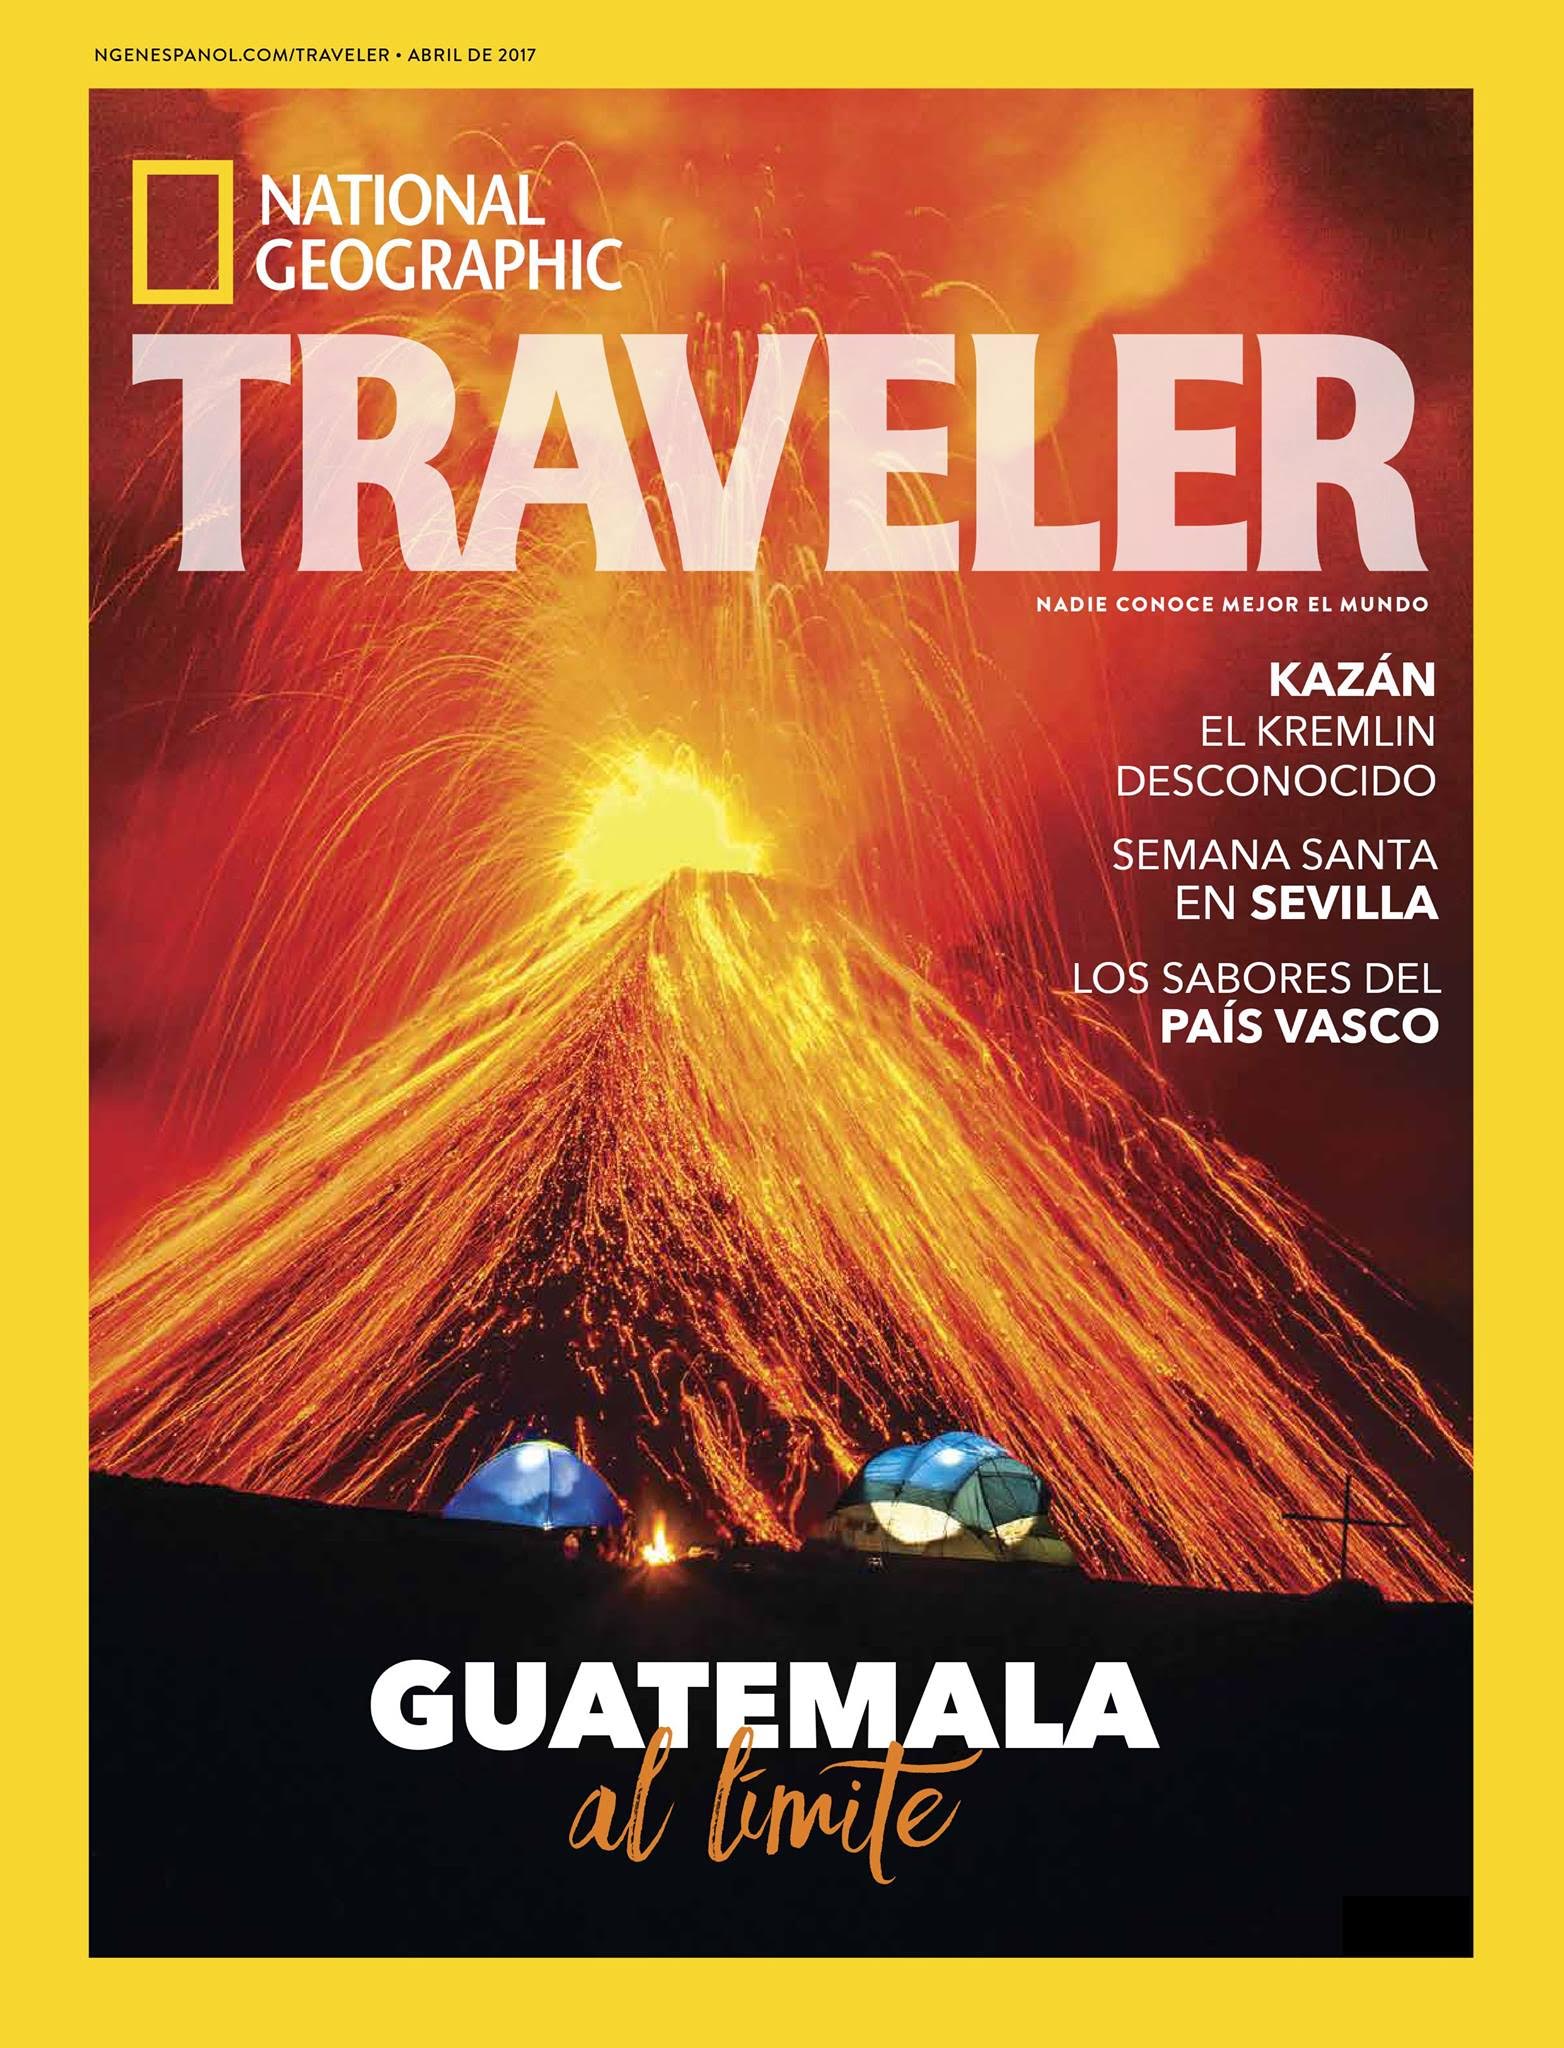 sergio-izquierdo-portada-national-geographic-traveler